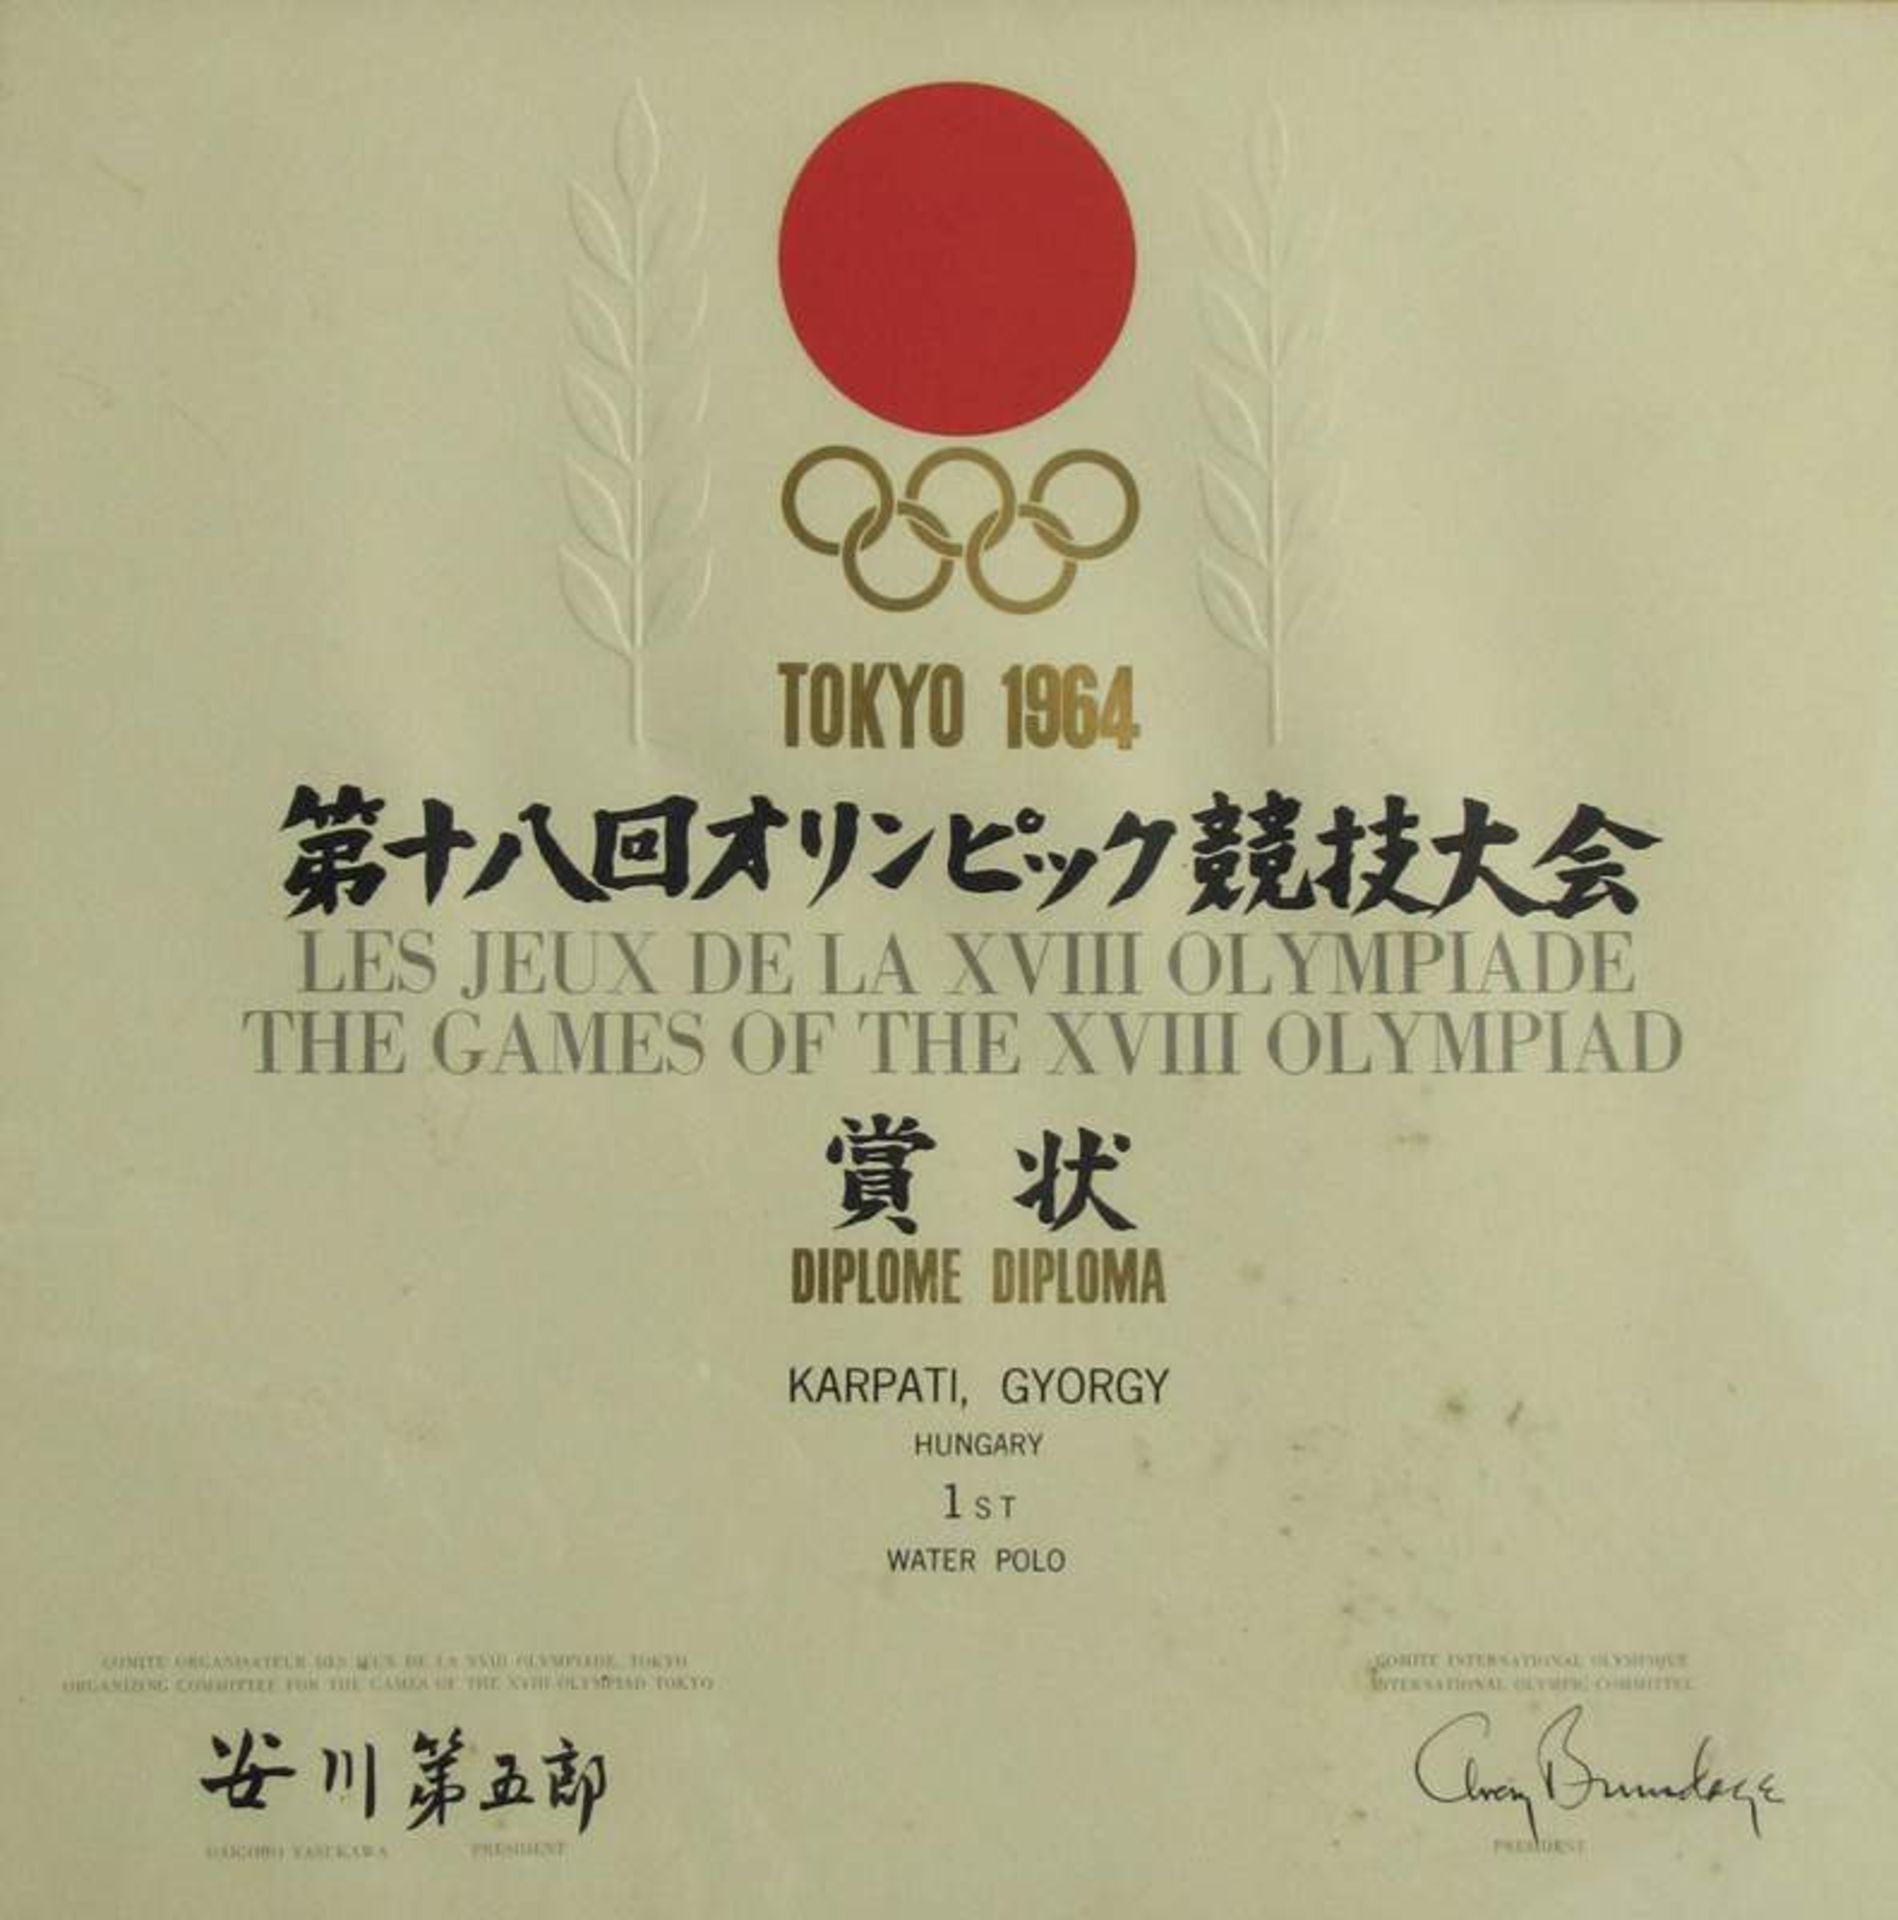 Olympic Games Tokio 1964. Winner's medal Diploma - Winner diploma for the Olympic Games TTokyo